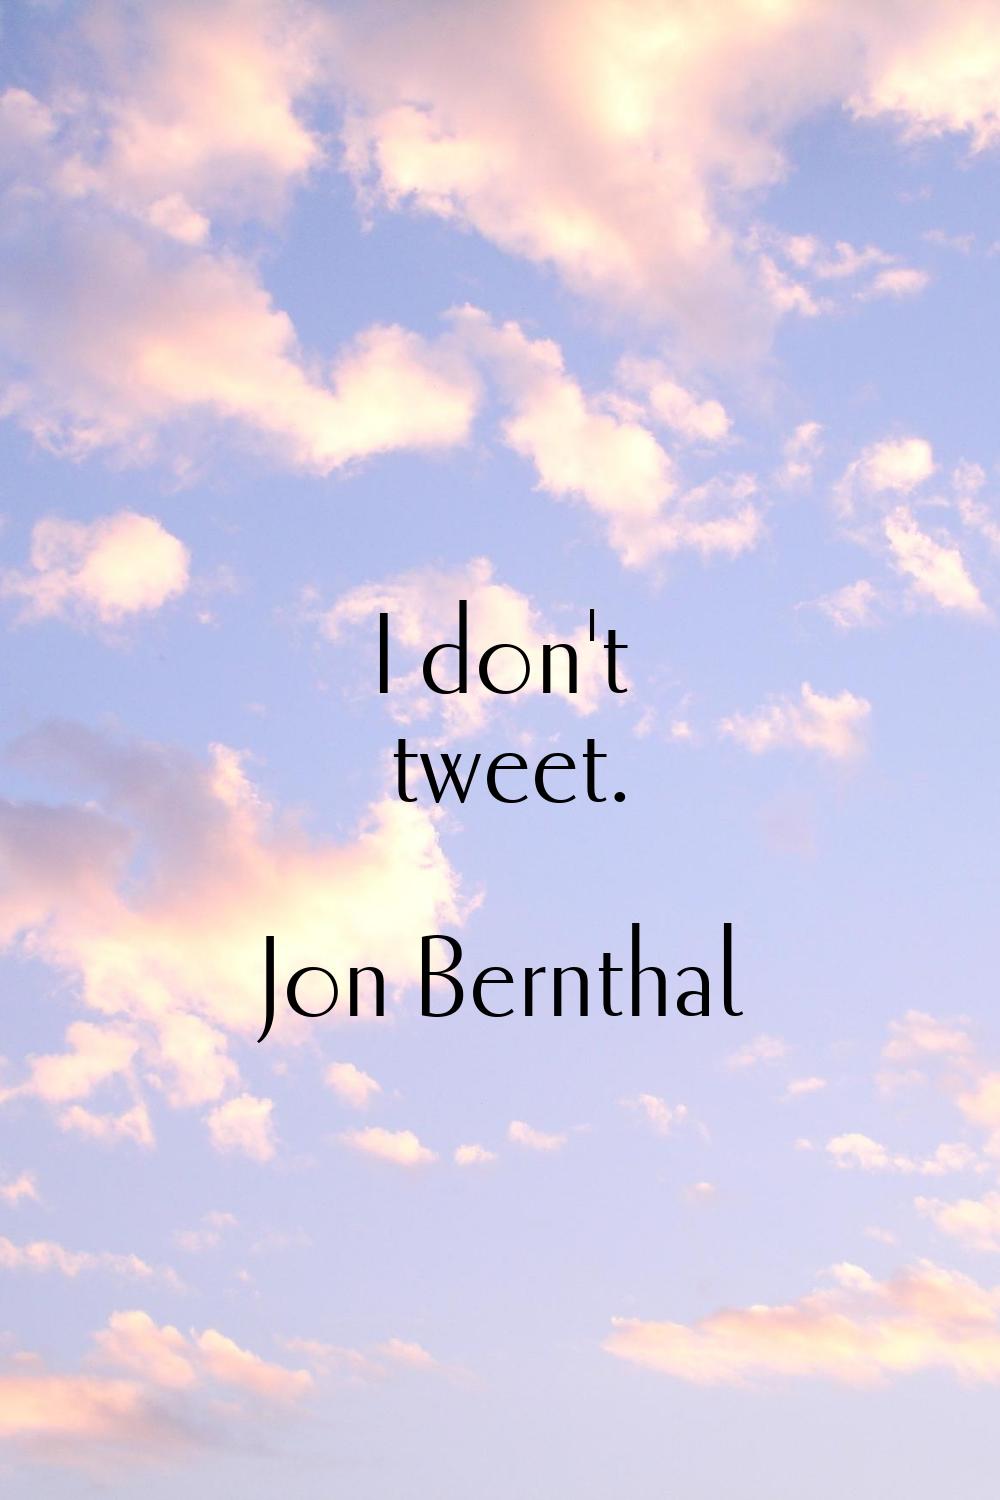 I don't tweet.